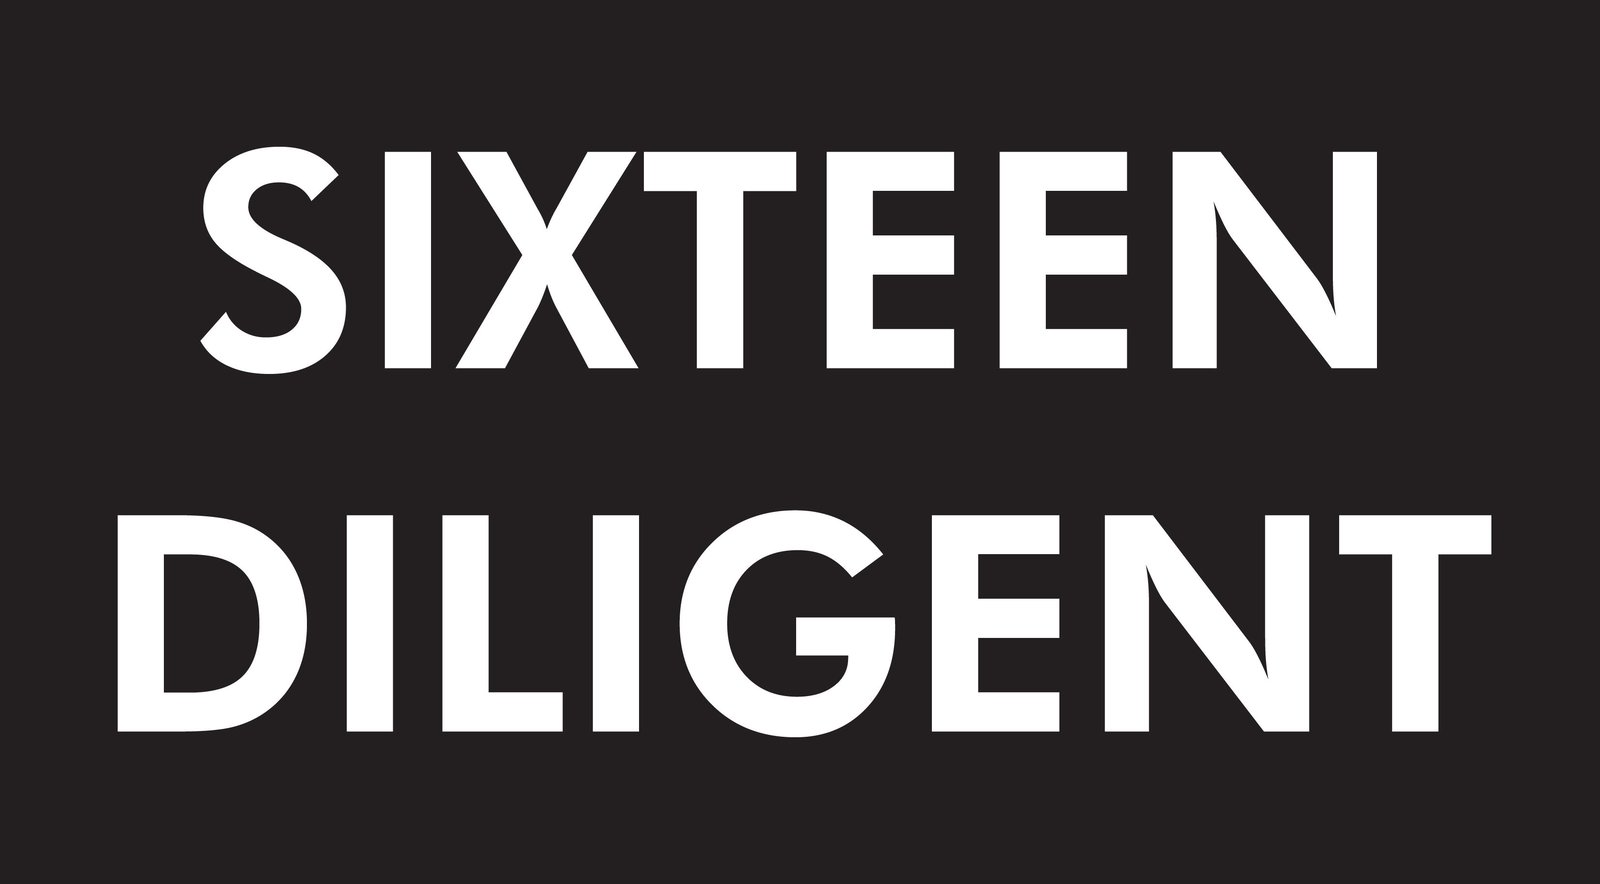 Sixteen Diligent